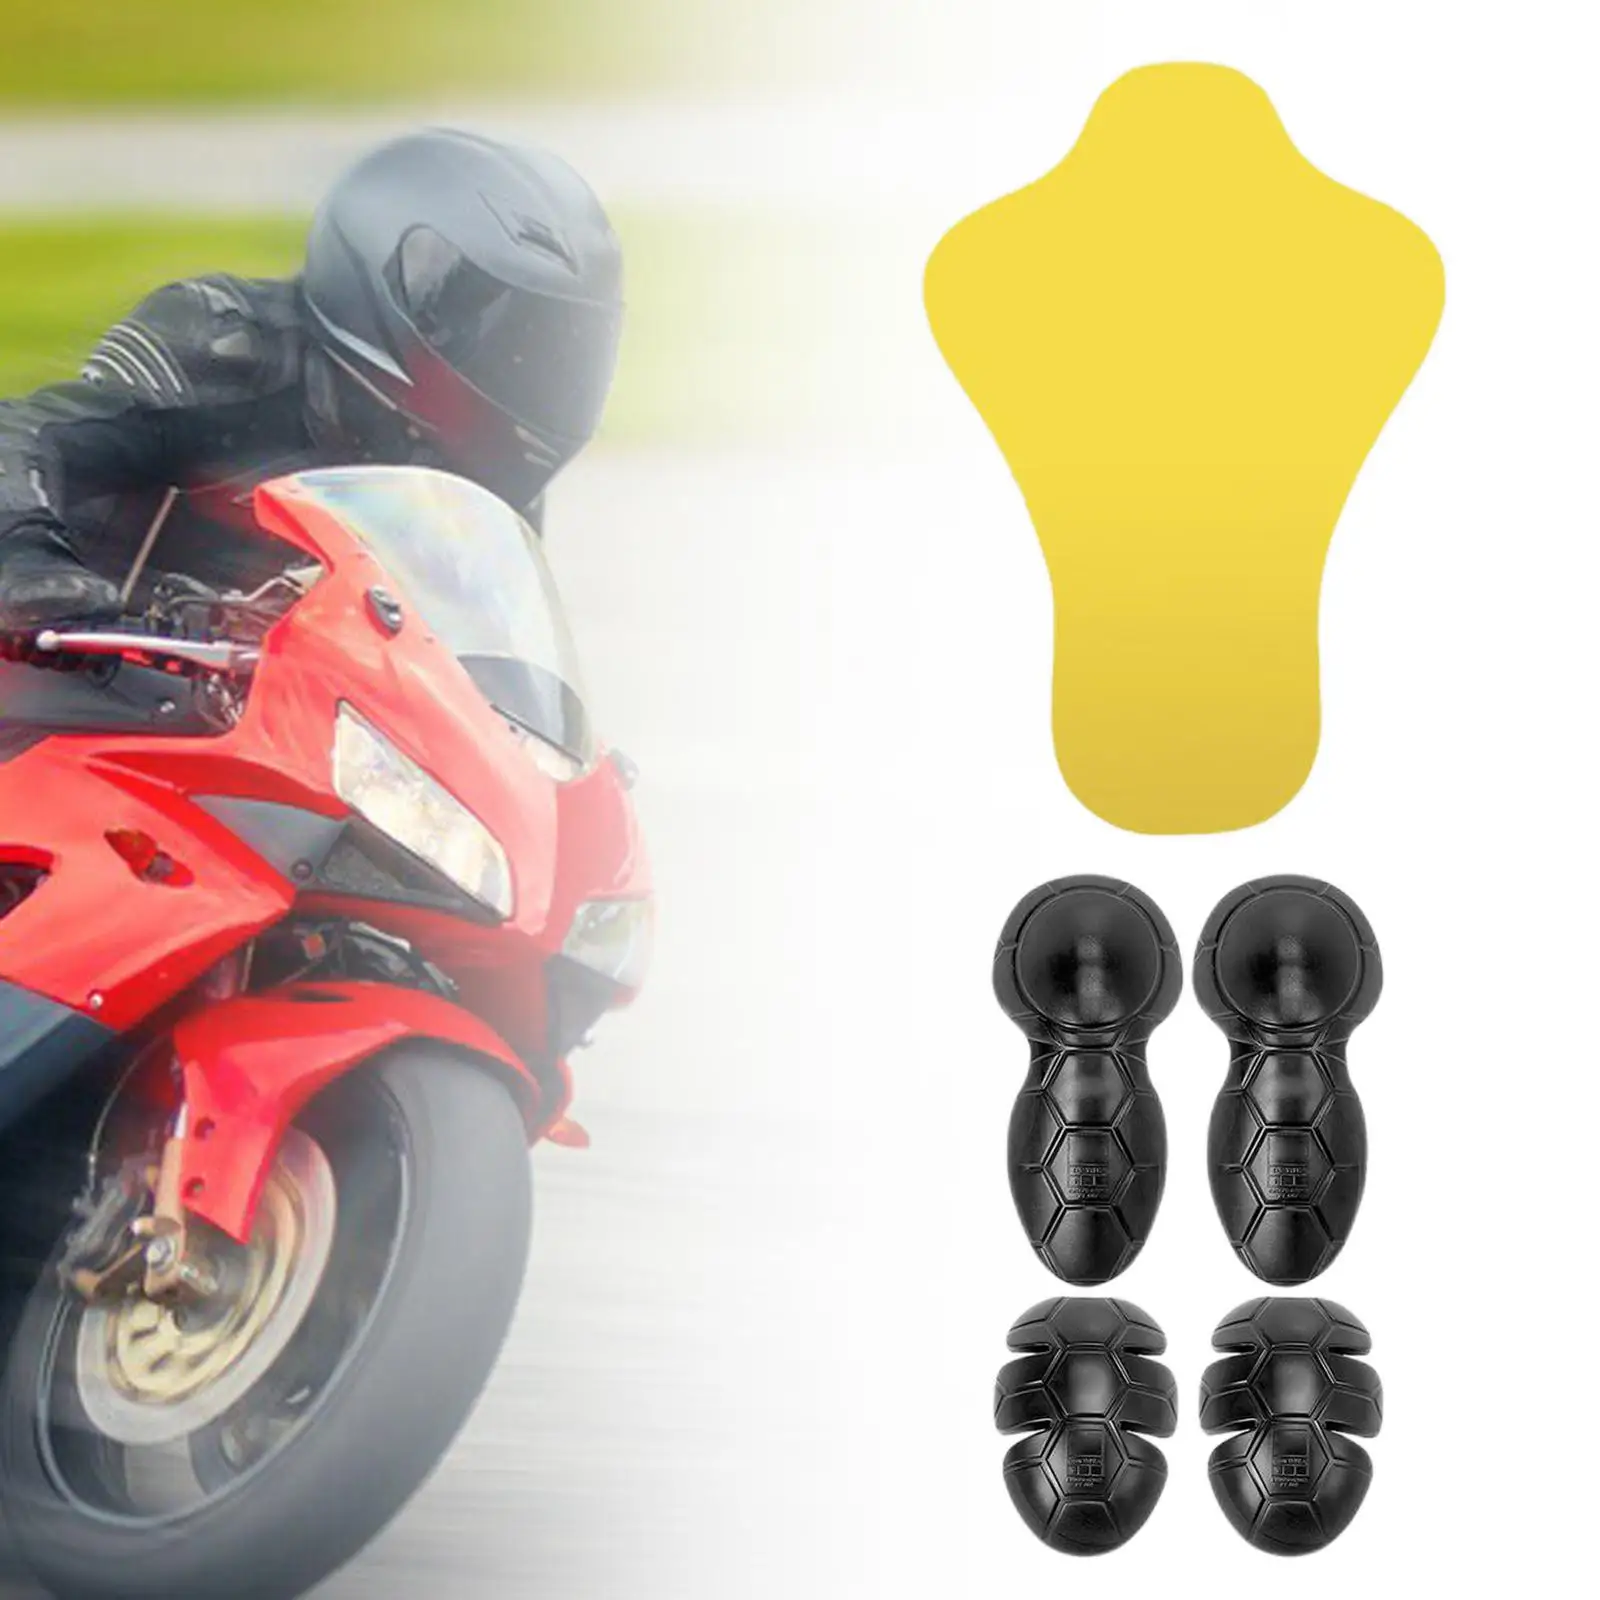 5Pcs Motorcycle Jacket Insert Armor Protectors Set Removable Motorcycle Biker Equipment